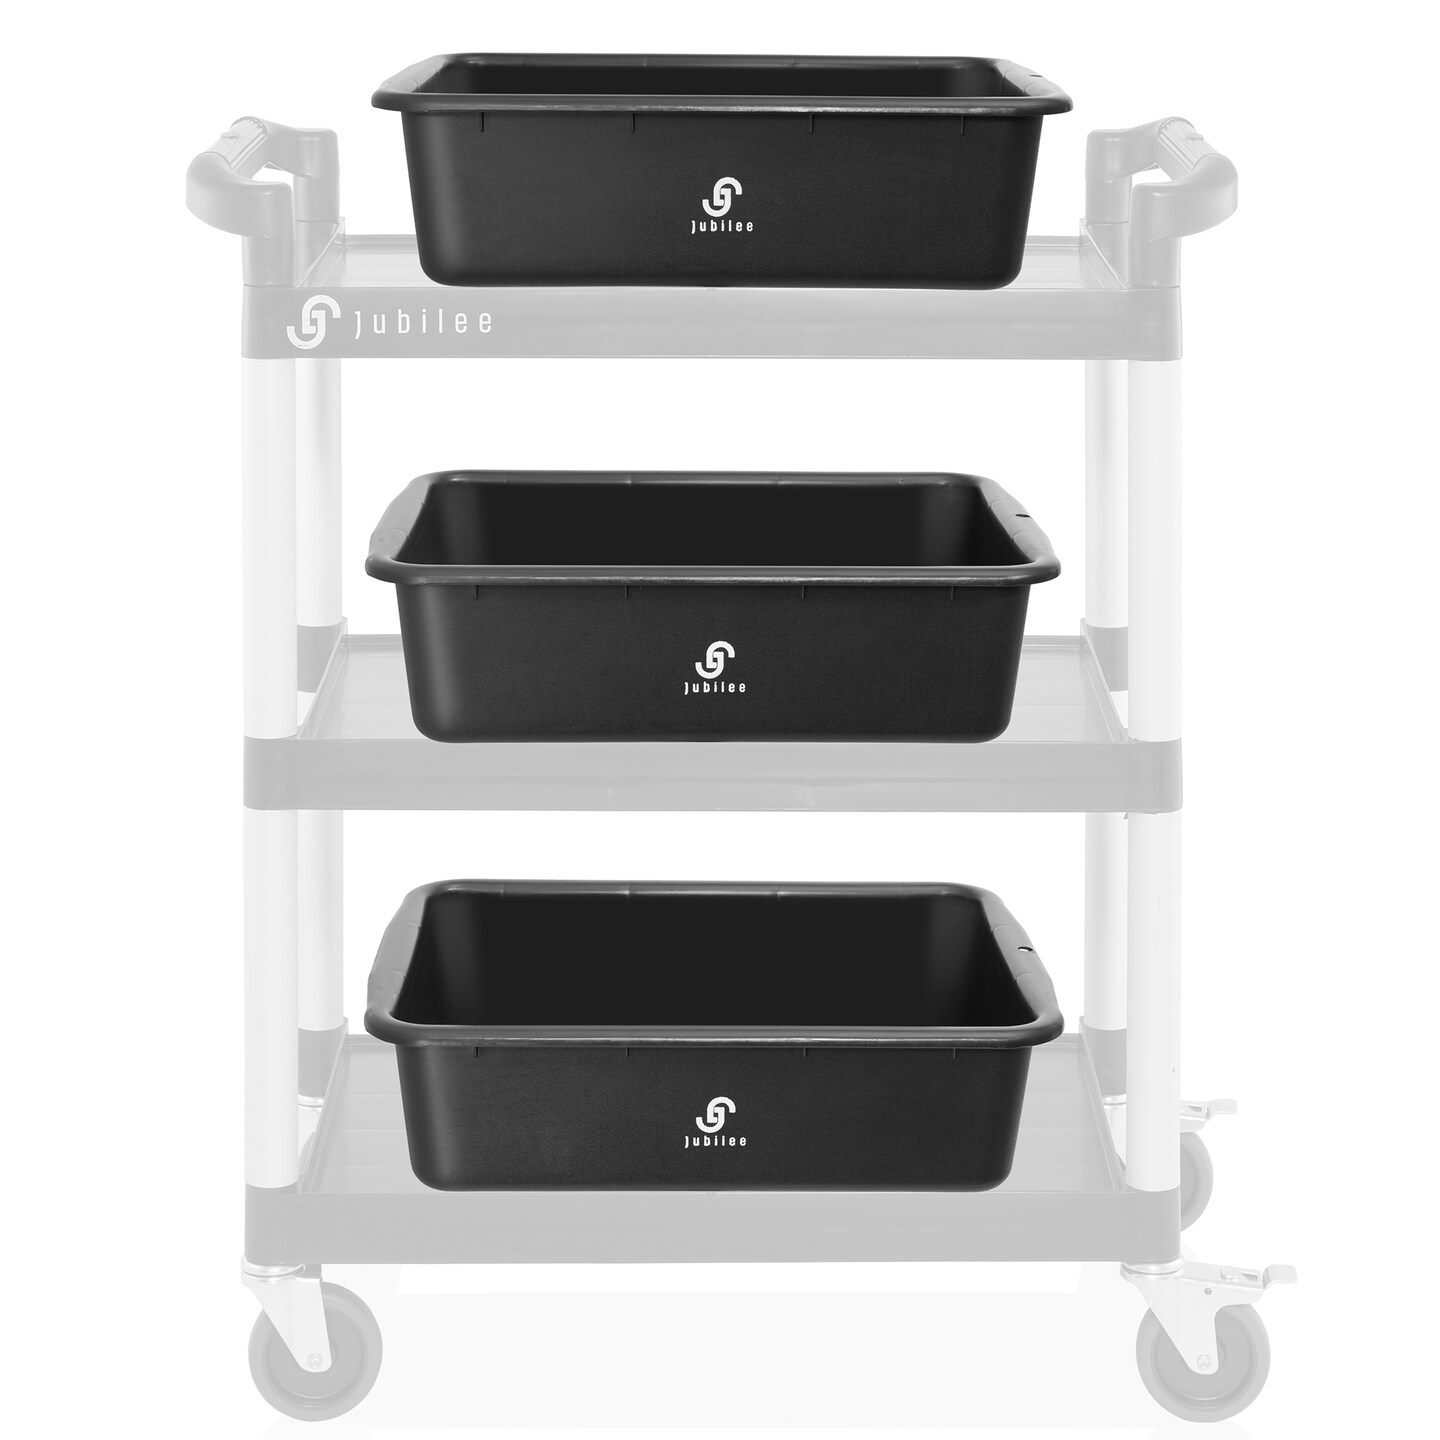 Jubilee 4-Pk Plastic Storage Bin, Bus Utility Tub - Heavy Duty Commercial Dishwashing Box for Restaurant Kitchen Organization and Storage